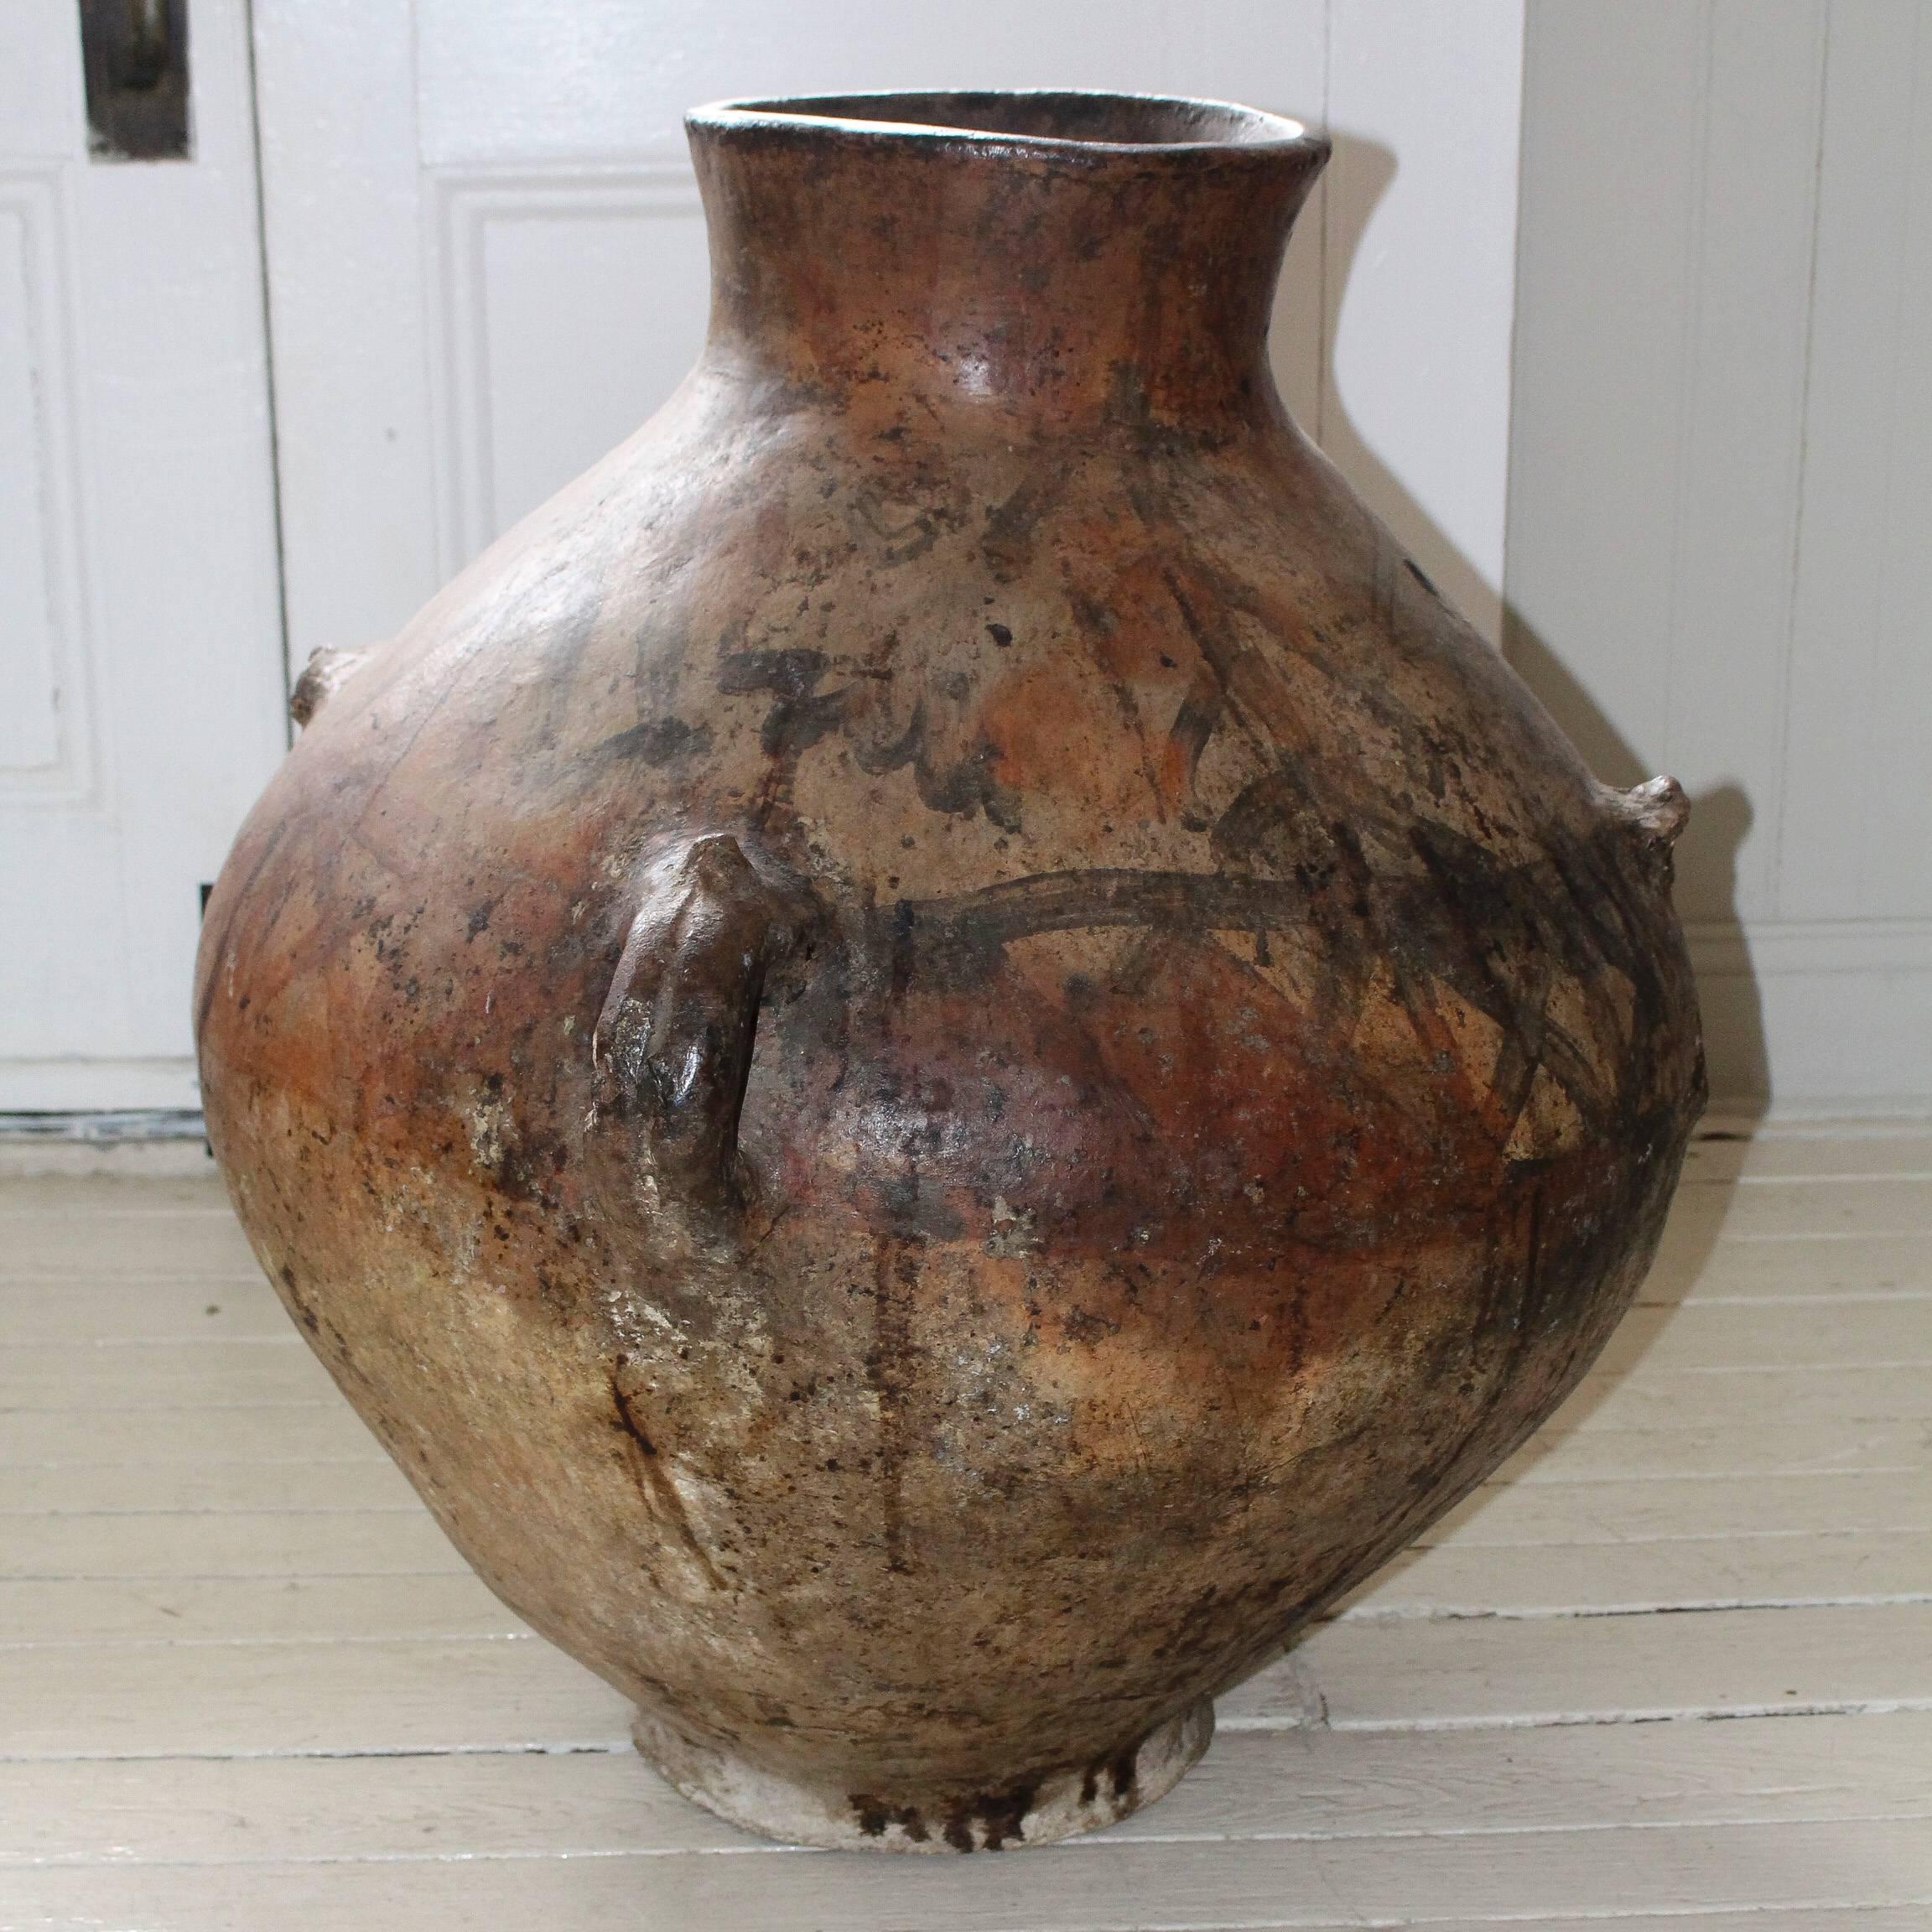 Monumental terra cotta Moroccan oil jar, late 19th century, with timeworn tribal markings.